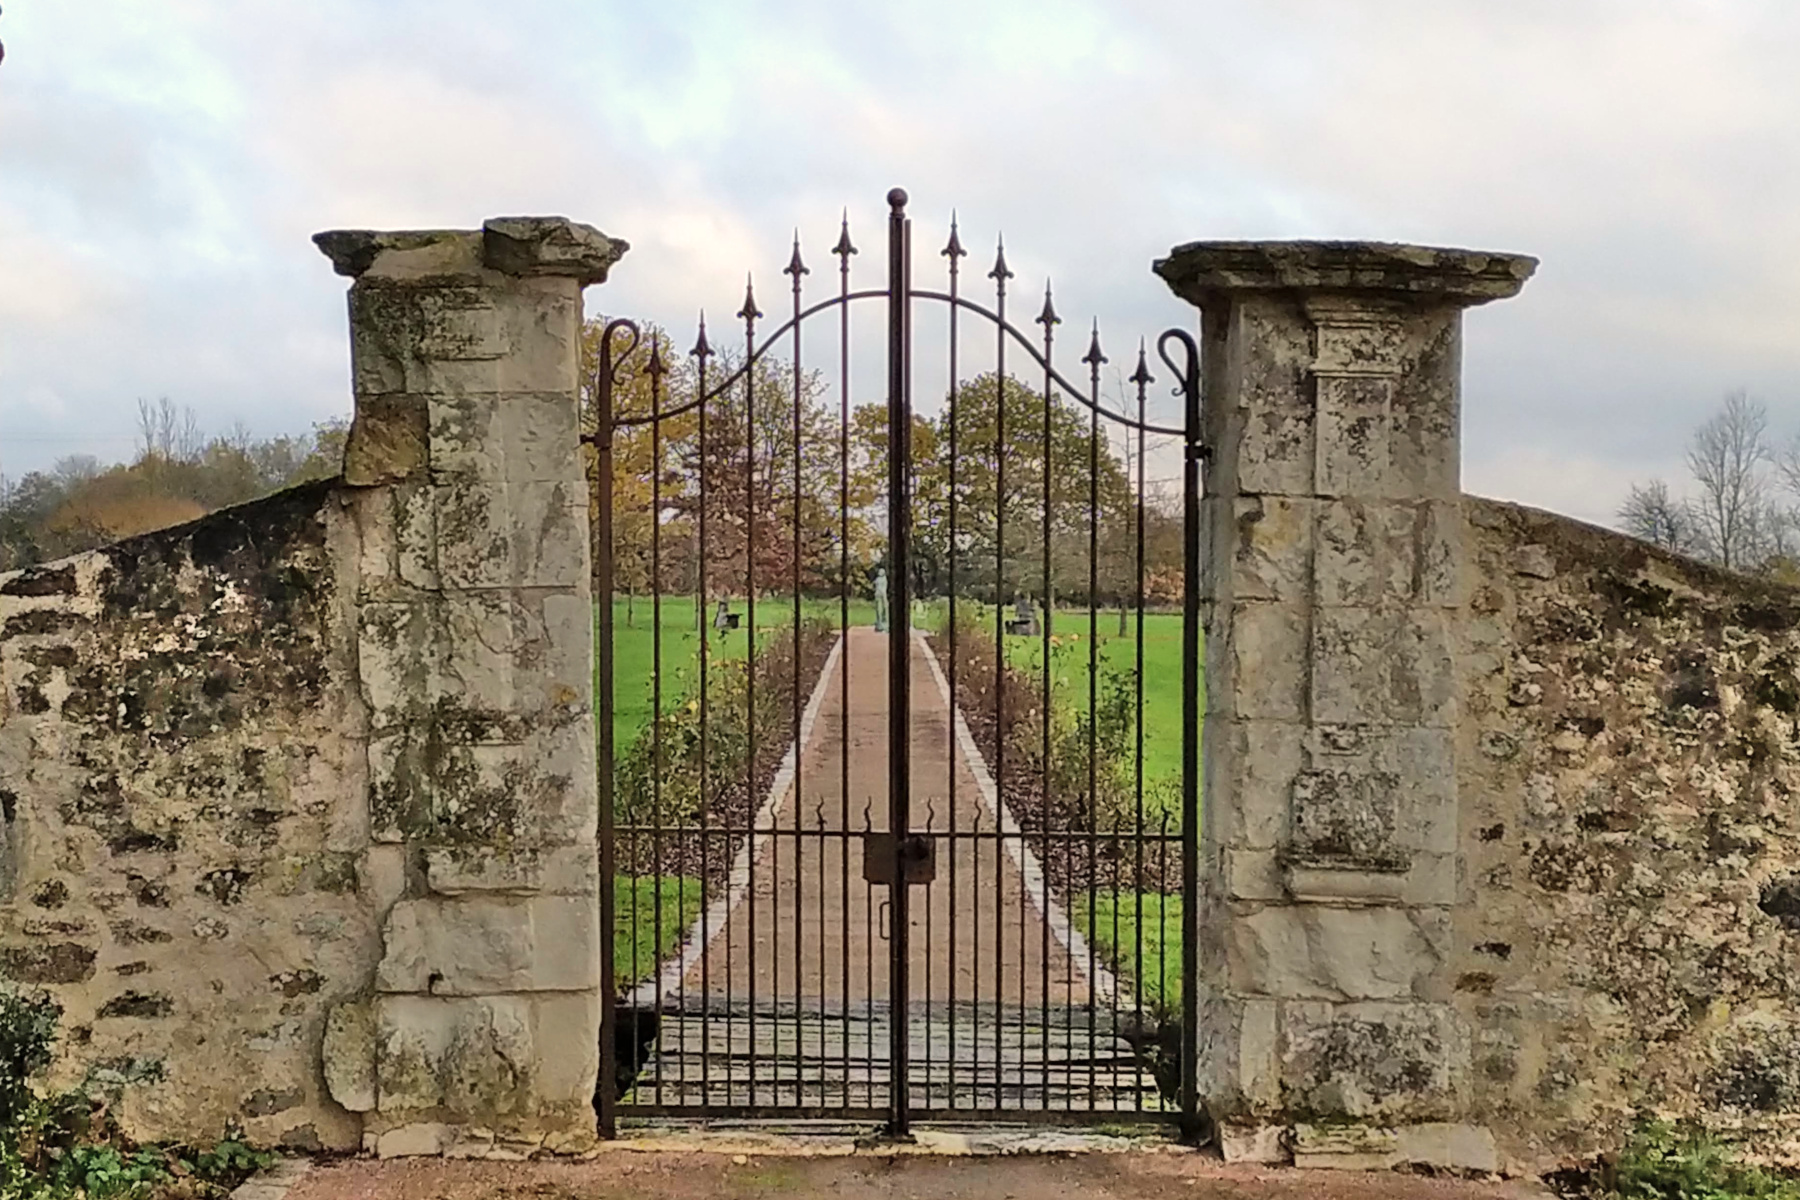 Photograph of iron gates